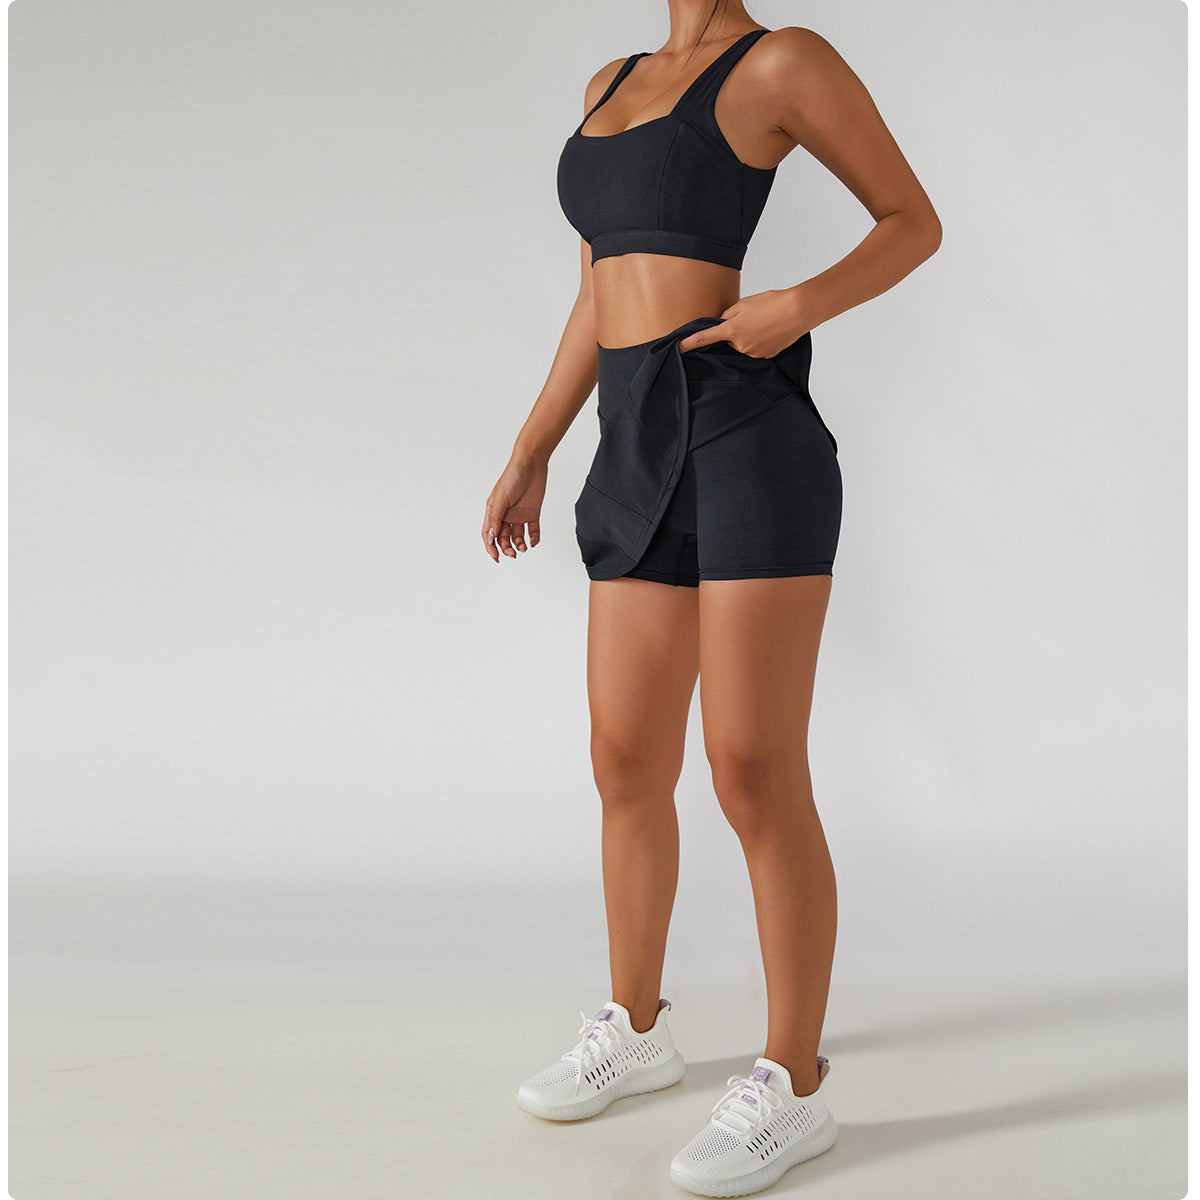 Wholesale Women's Pleated Tennis Shorts Skirt